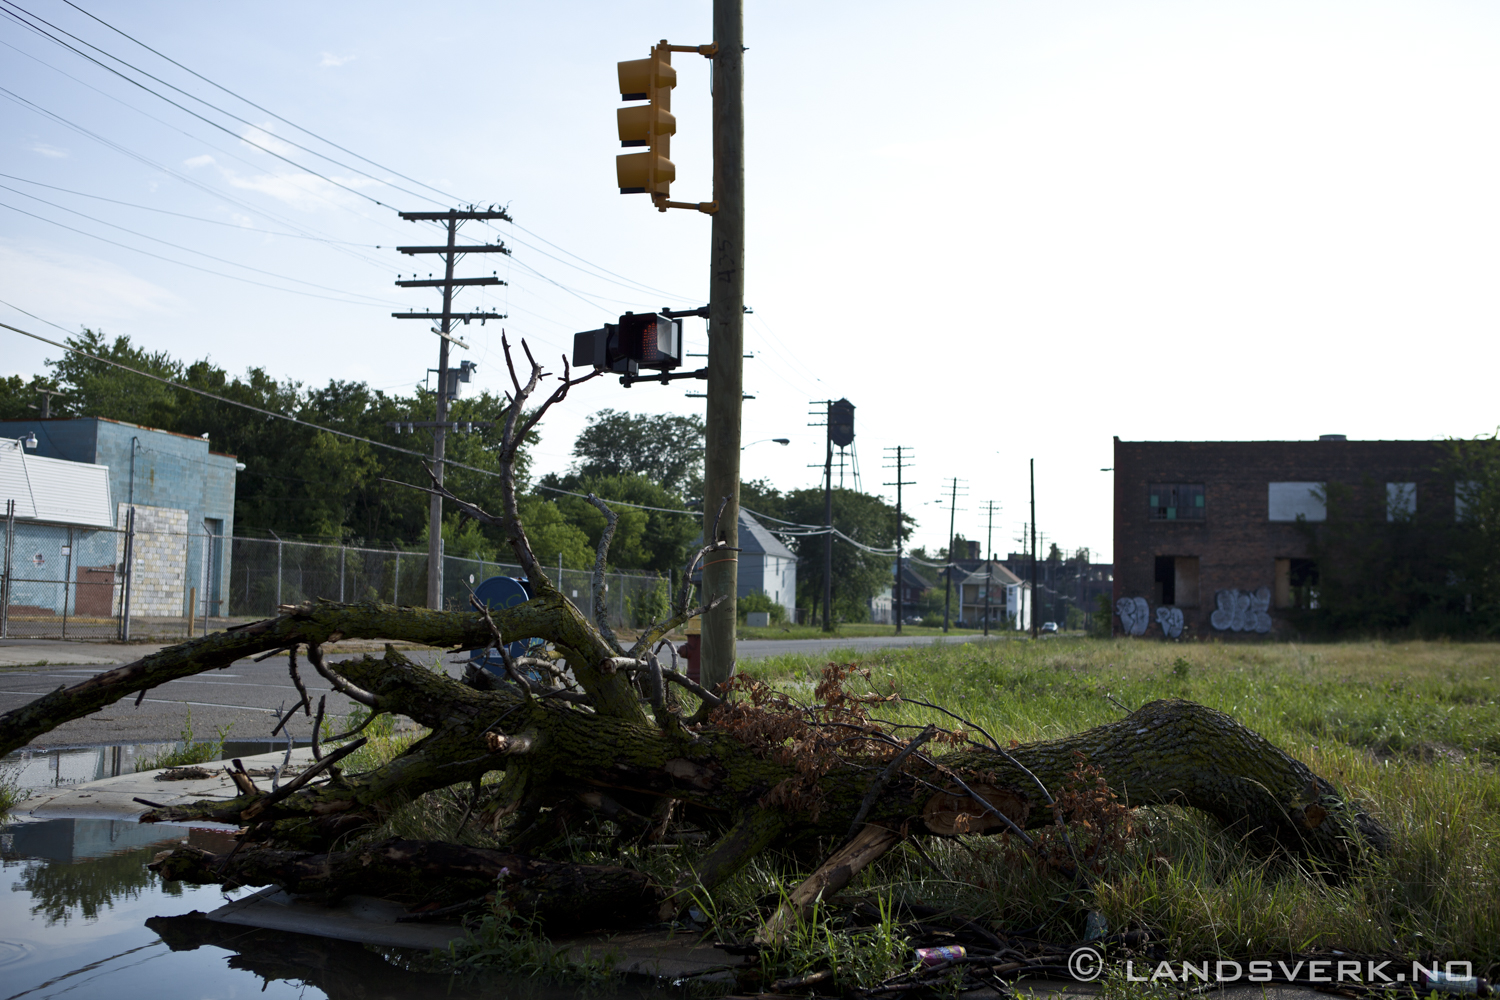 Detroit suburbs, Michigan. 

(Canon EOS 5D Mark II / Canon EF 24-70mm f/2.8 L USM)